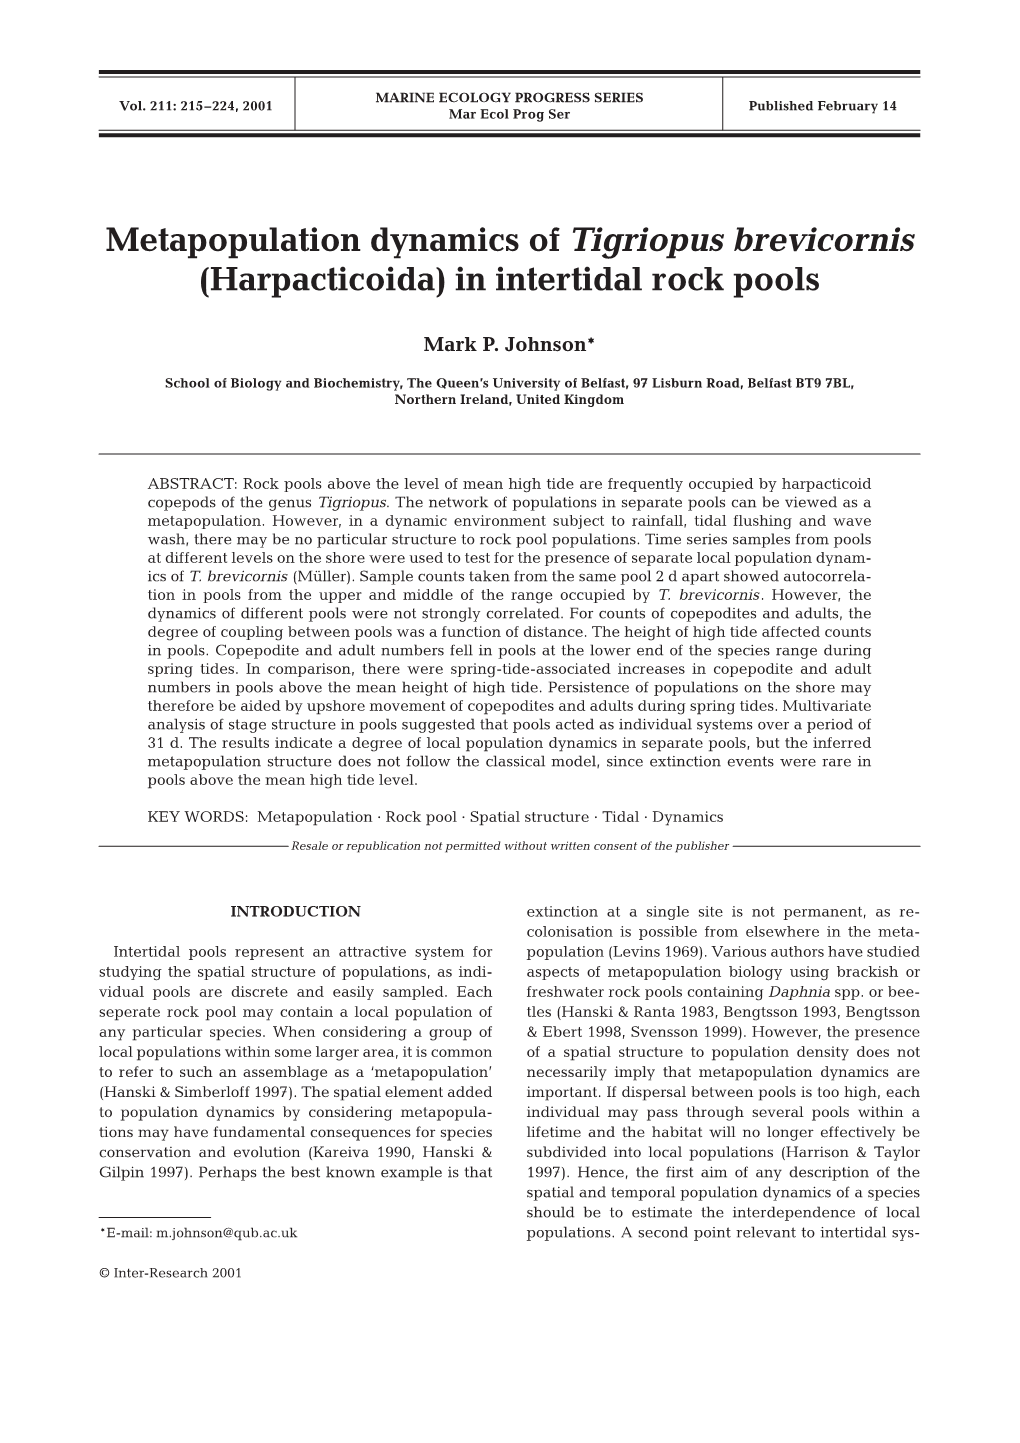 Metapopulation Dynamics of Tigriopus Brevicornis (Harpacticoida) in Intertidal Rock Pools